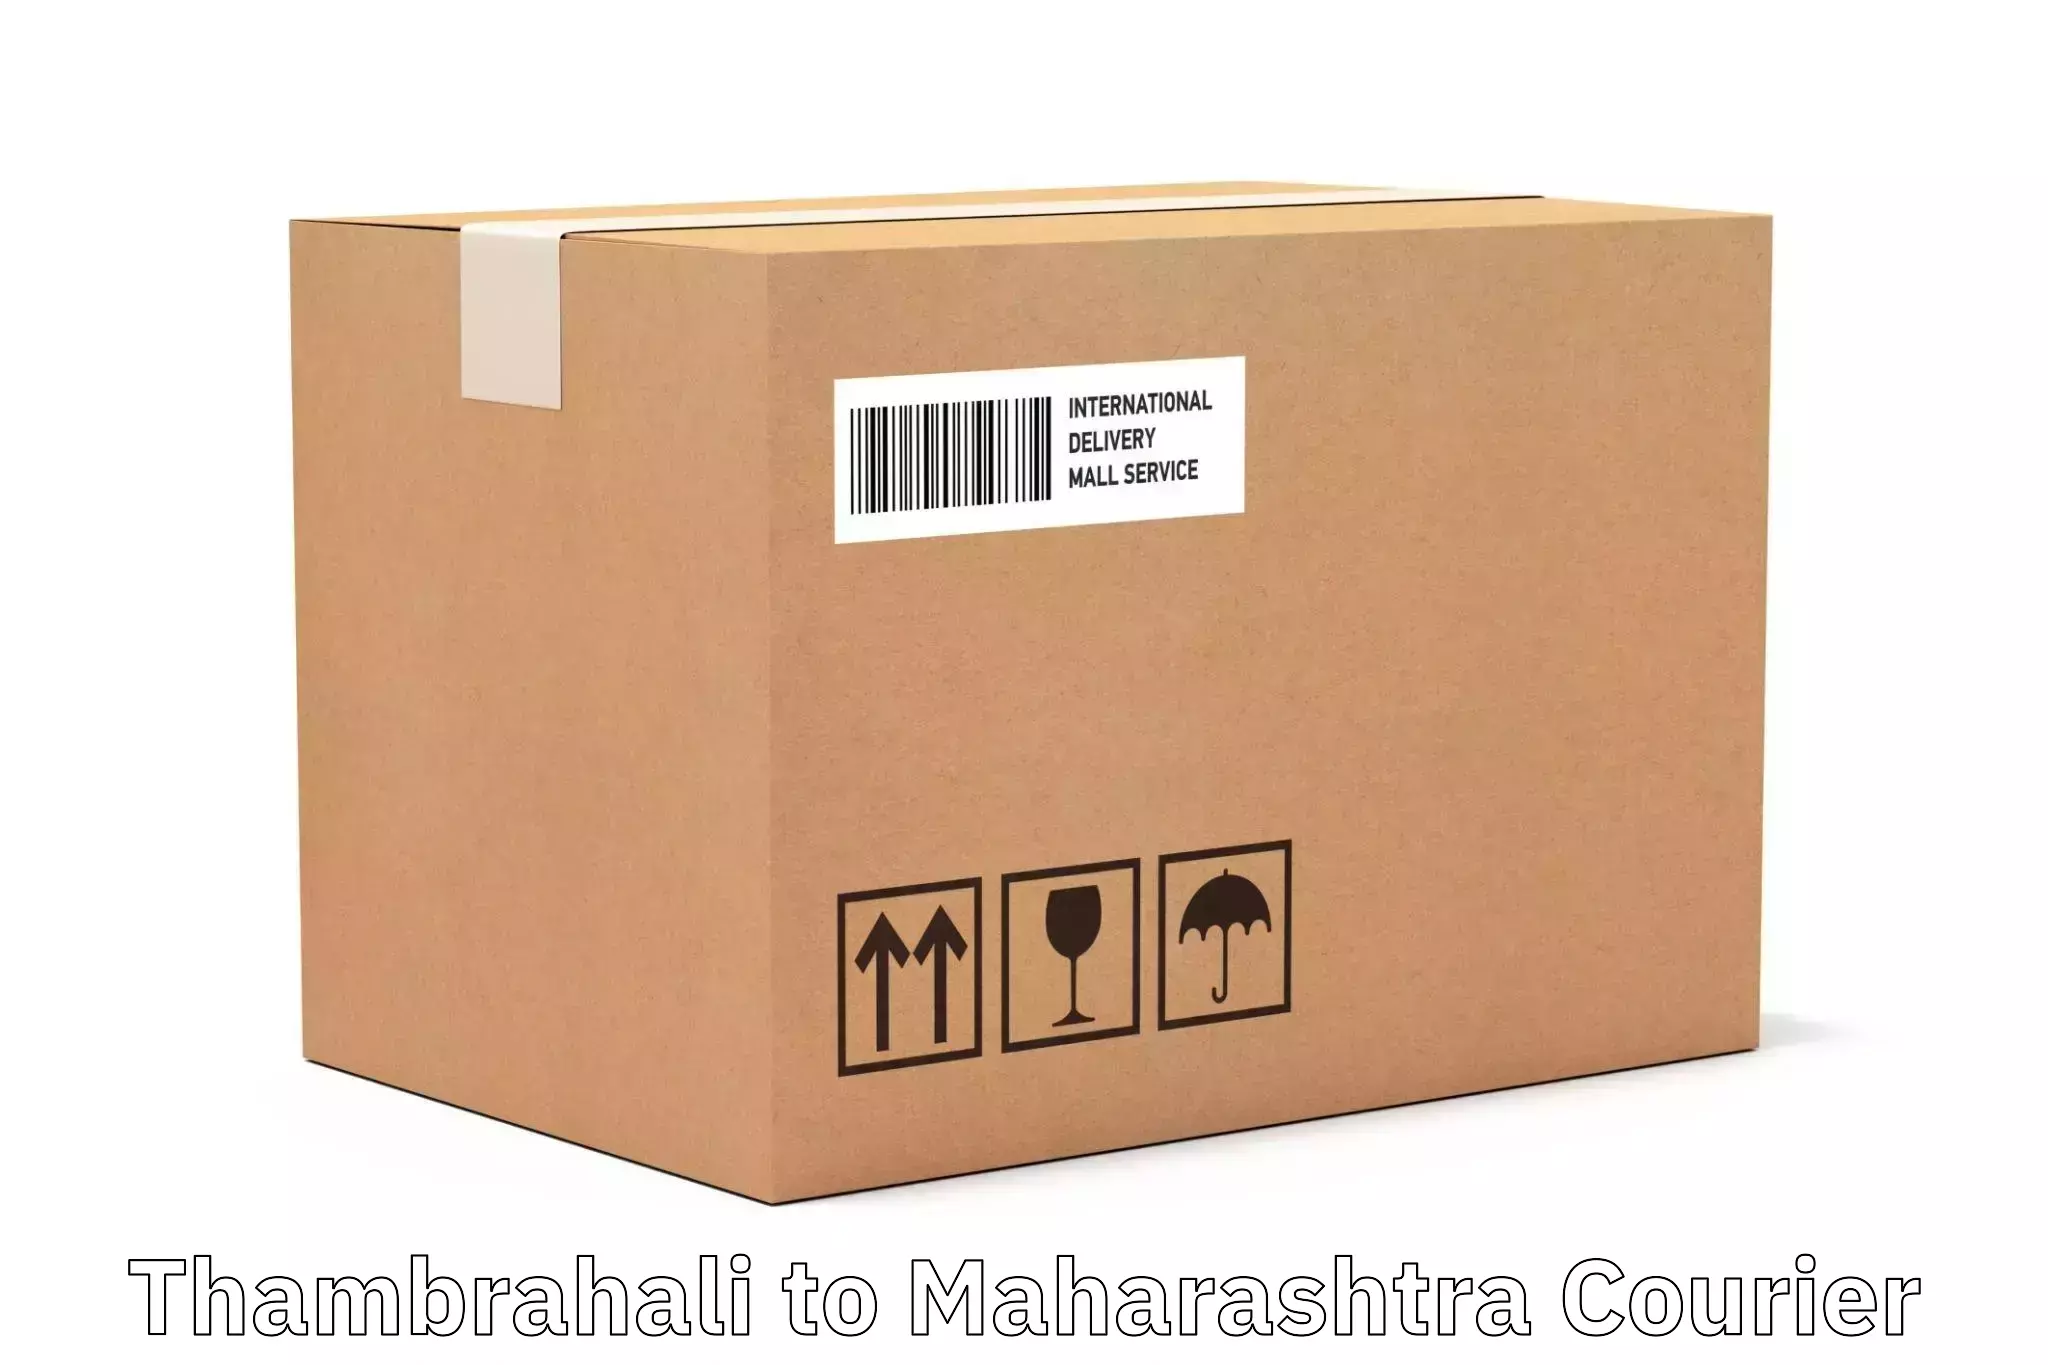 International parcel service Thambrahali to Pimpri Chinchwad